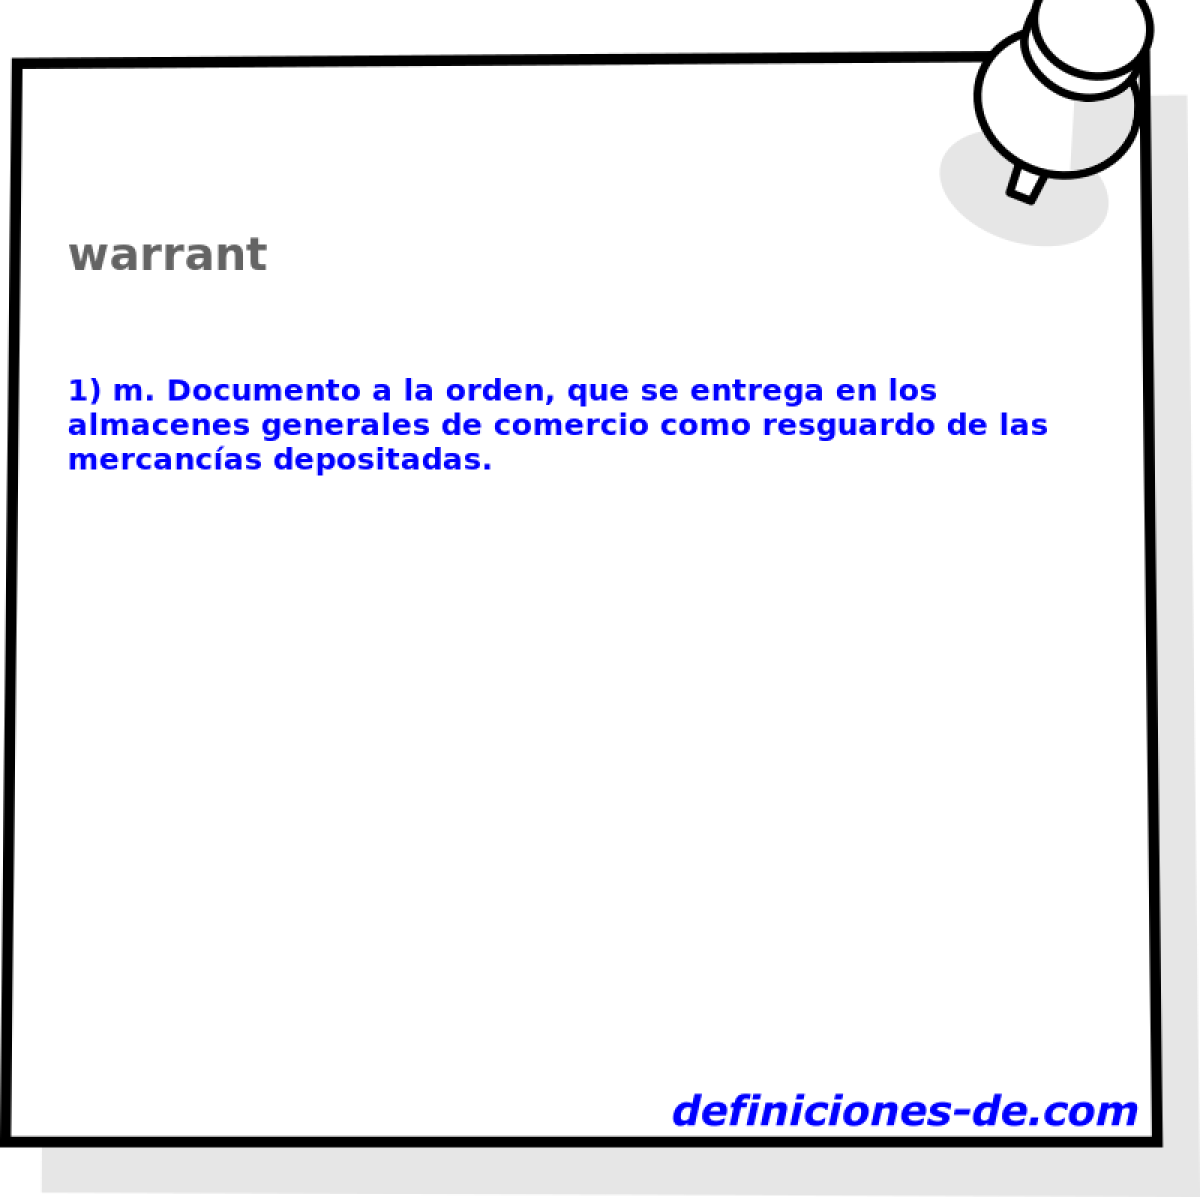 warrant 